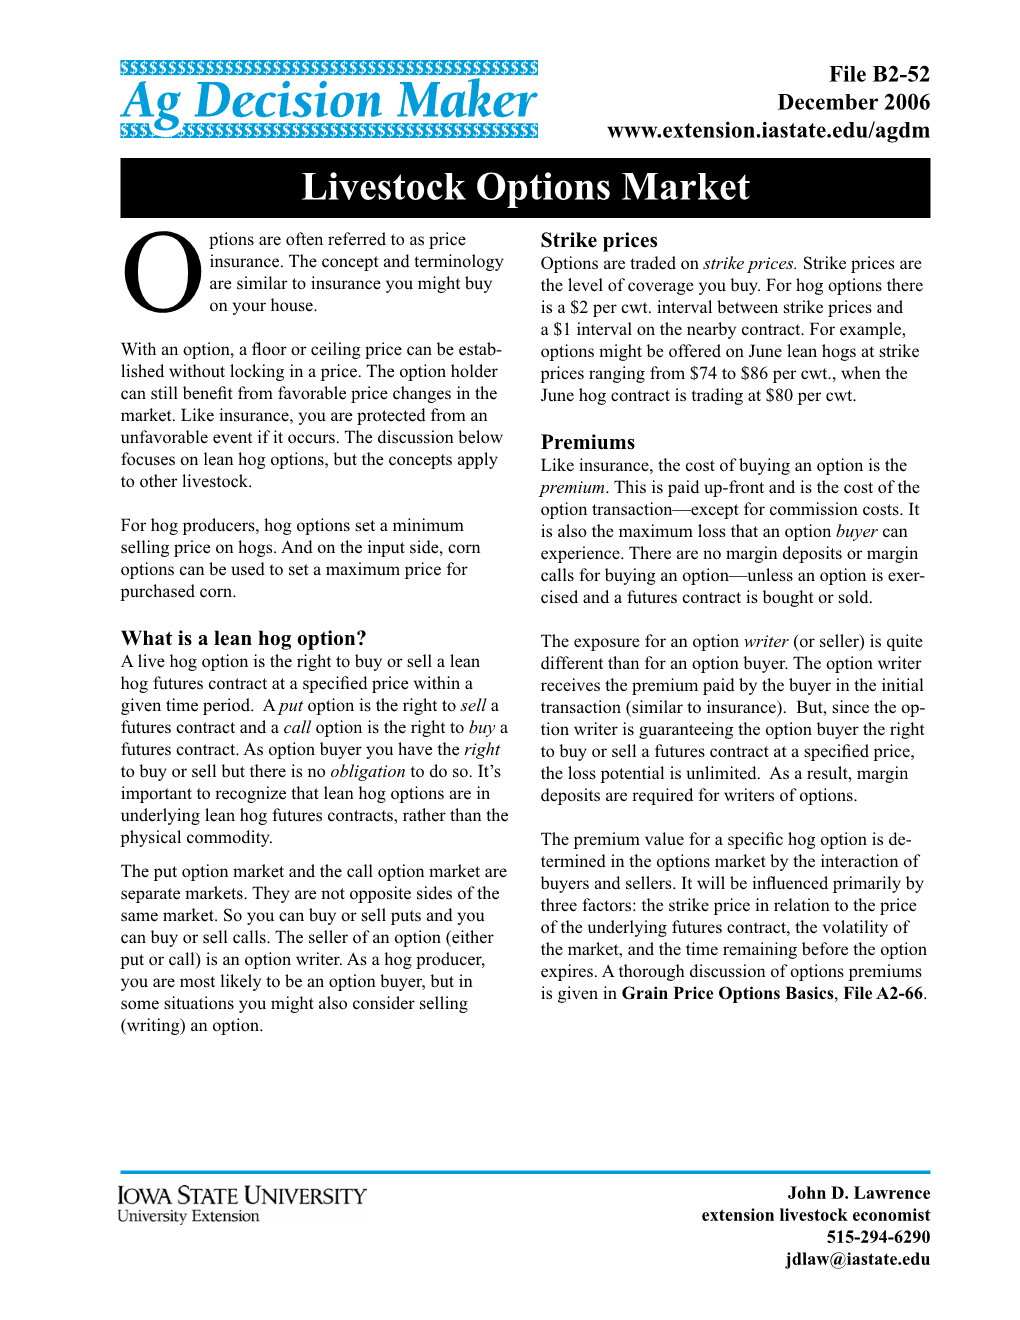 Livestock Options Market